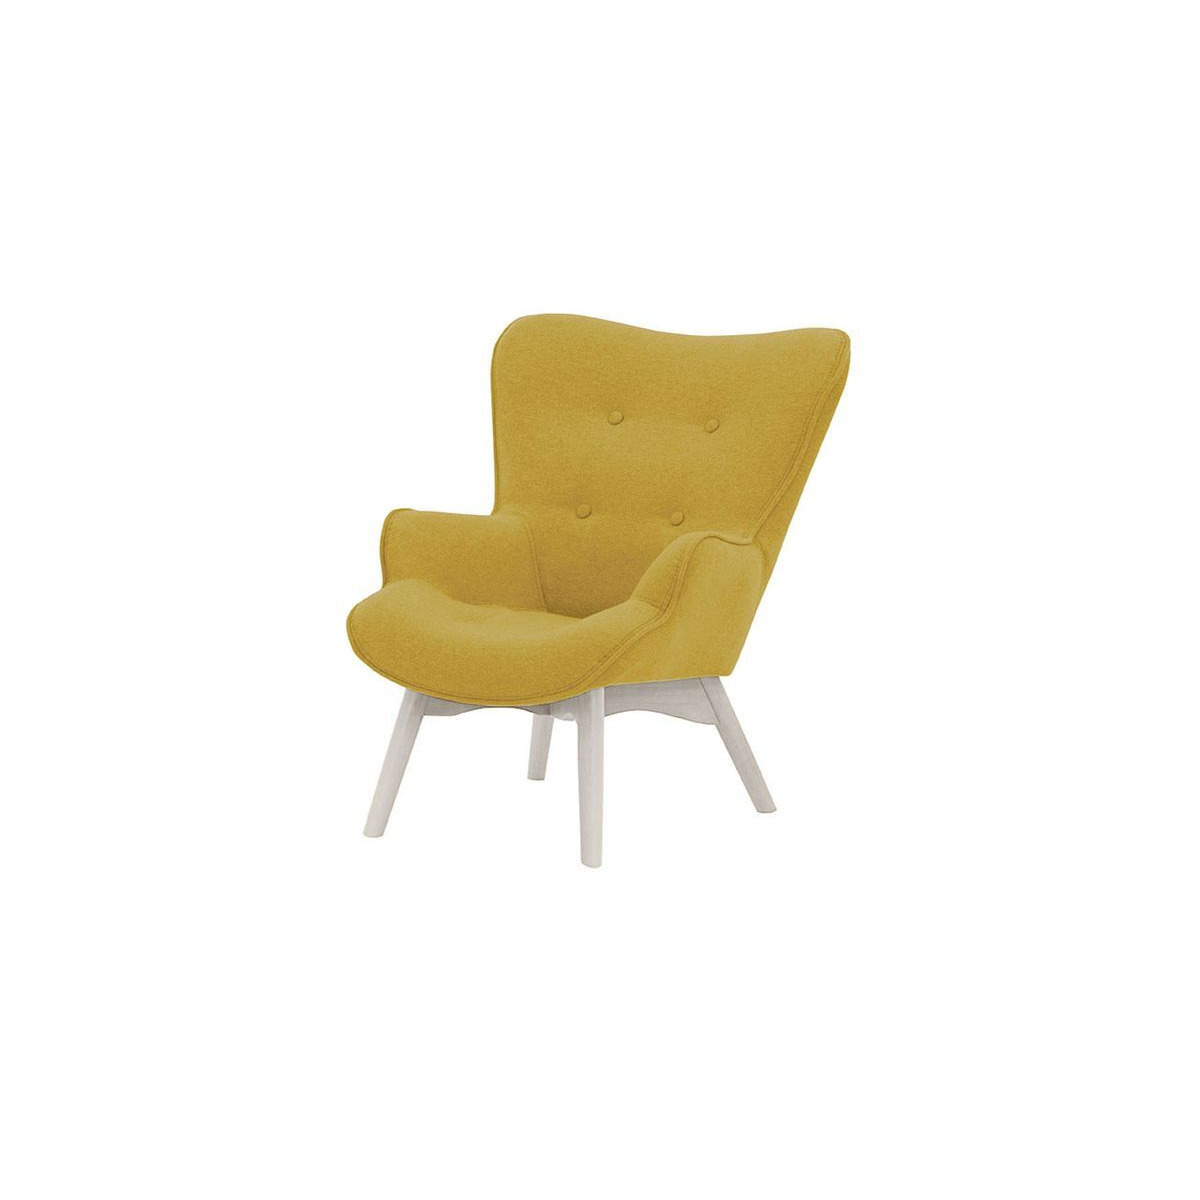 Ducon Mini Children's Wingback Chair, yellow, Leg colour: white - image 1